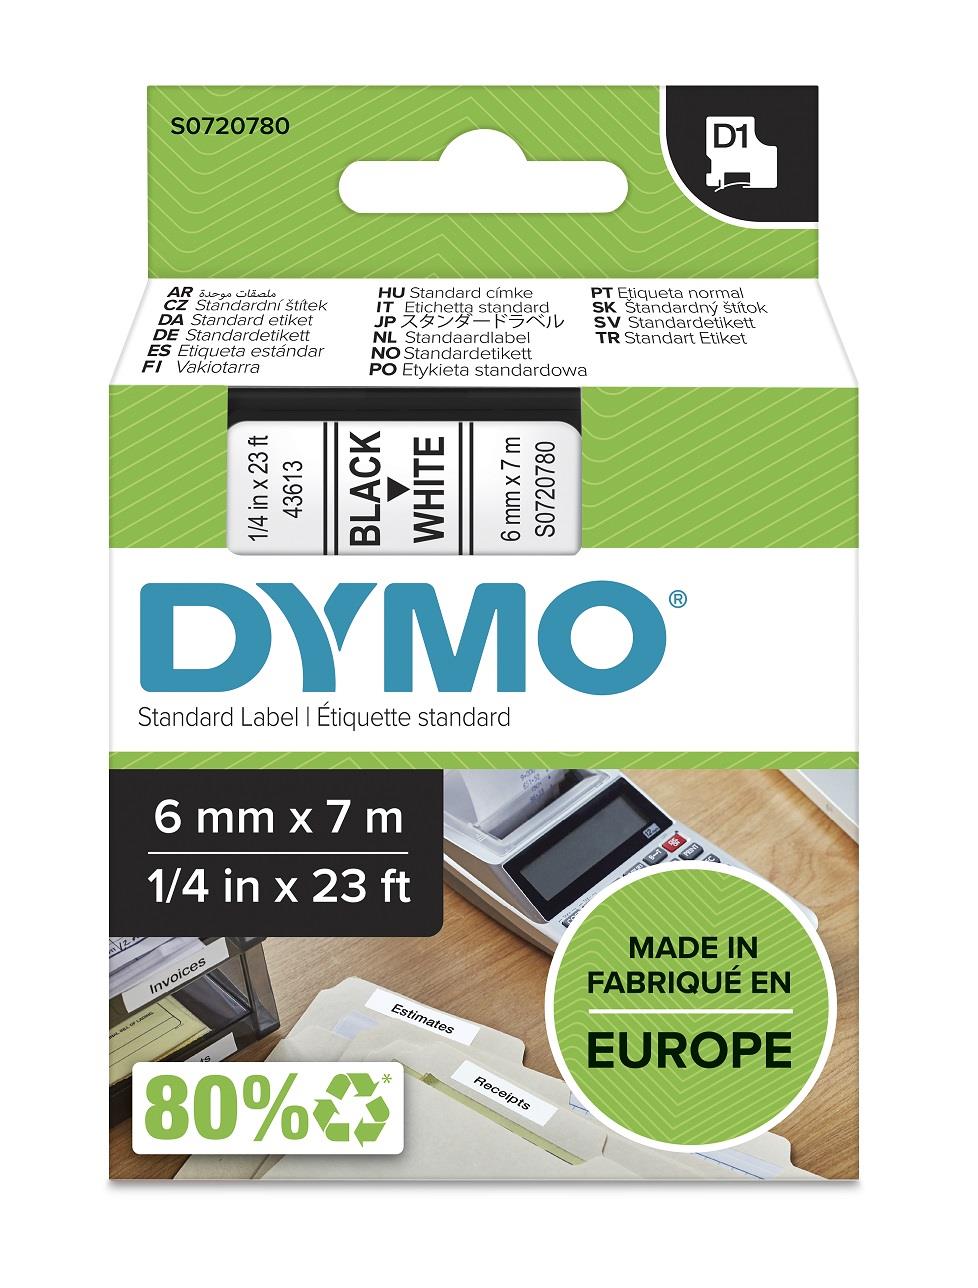 DYMO páska D1 6mm x 7 m, černá na bílé, 43613, S0720780